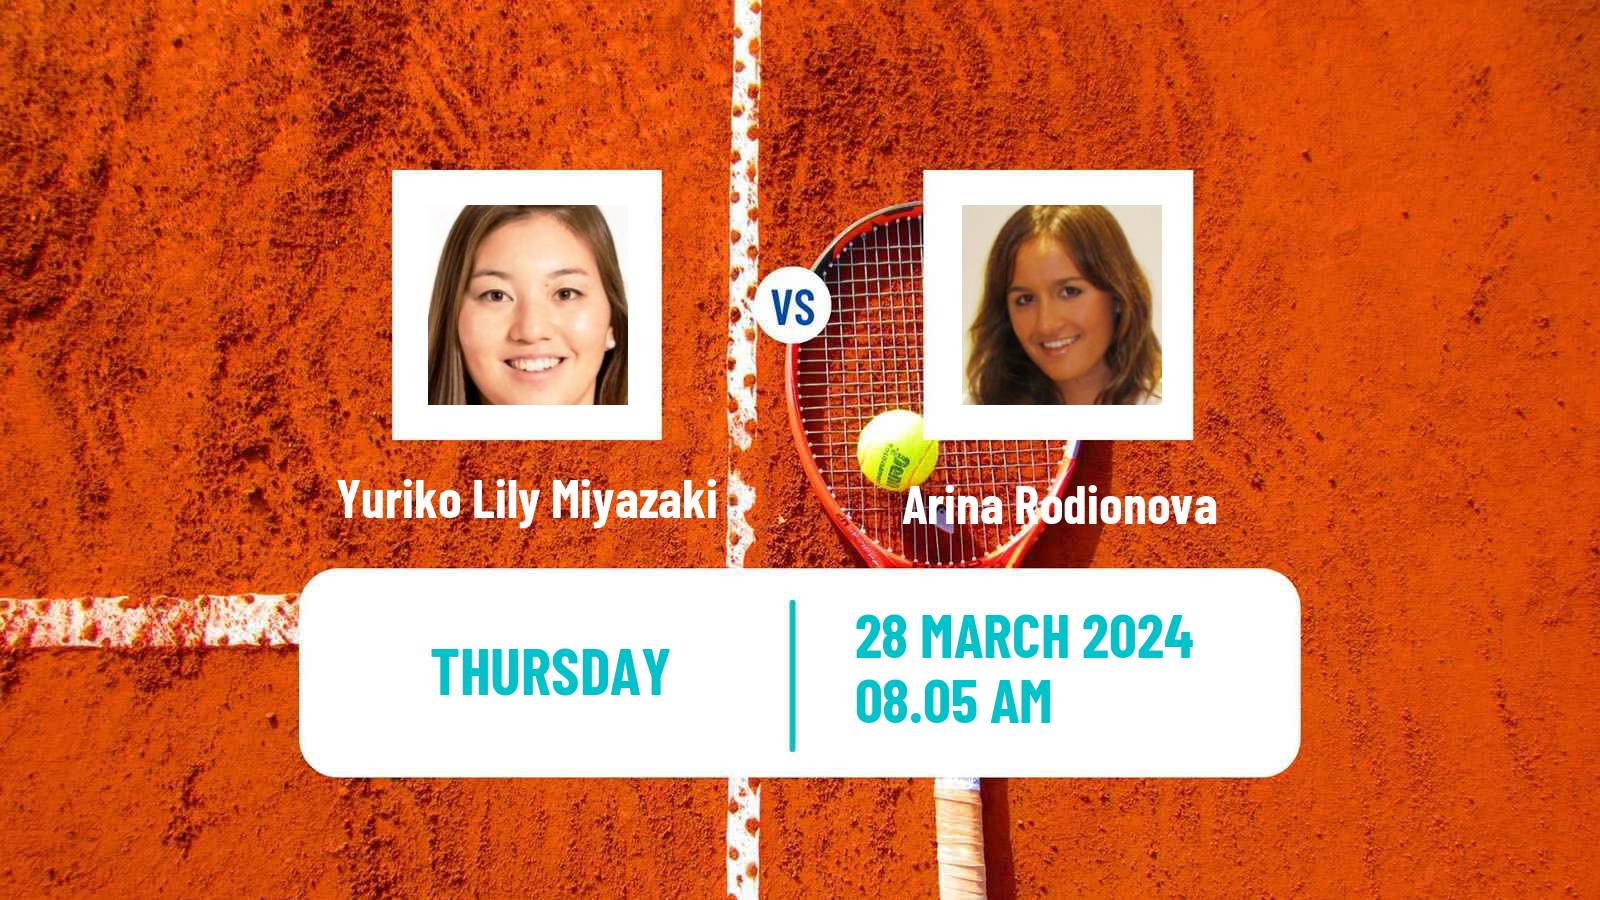 Tennis ITF W75 Croissy Beaubourg Women Yuriko Lily Miyazaki - Arina Rodionova